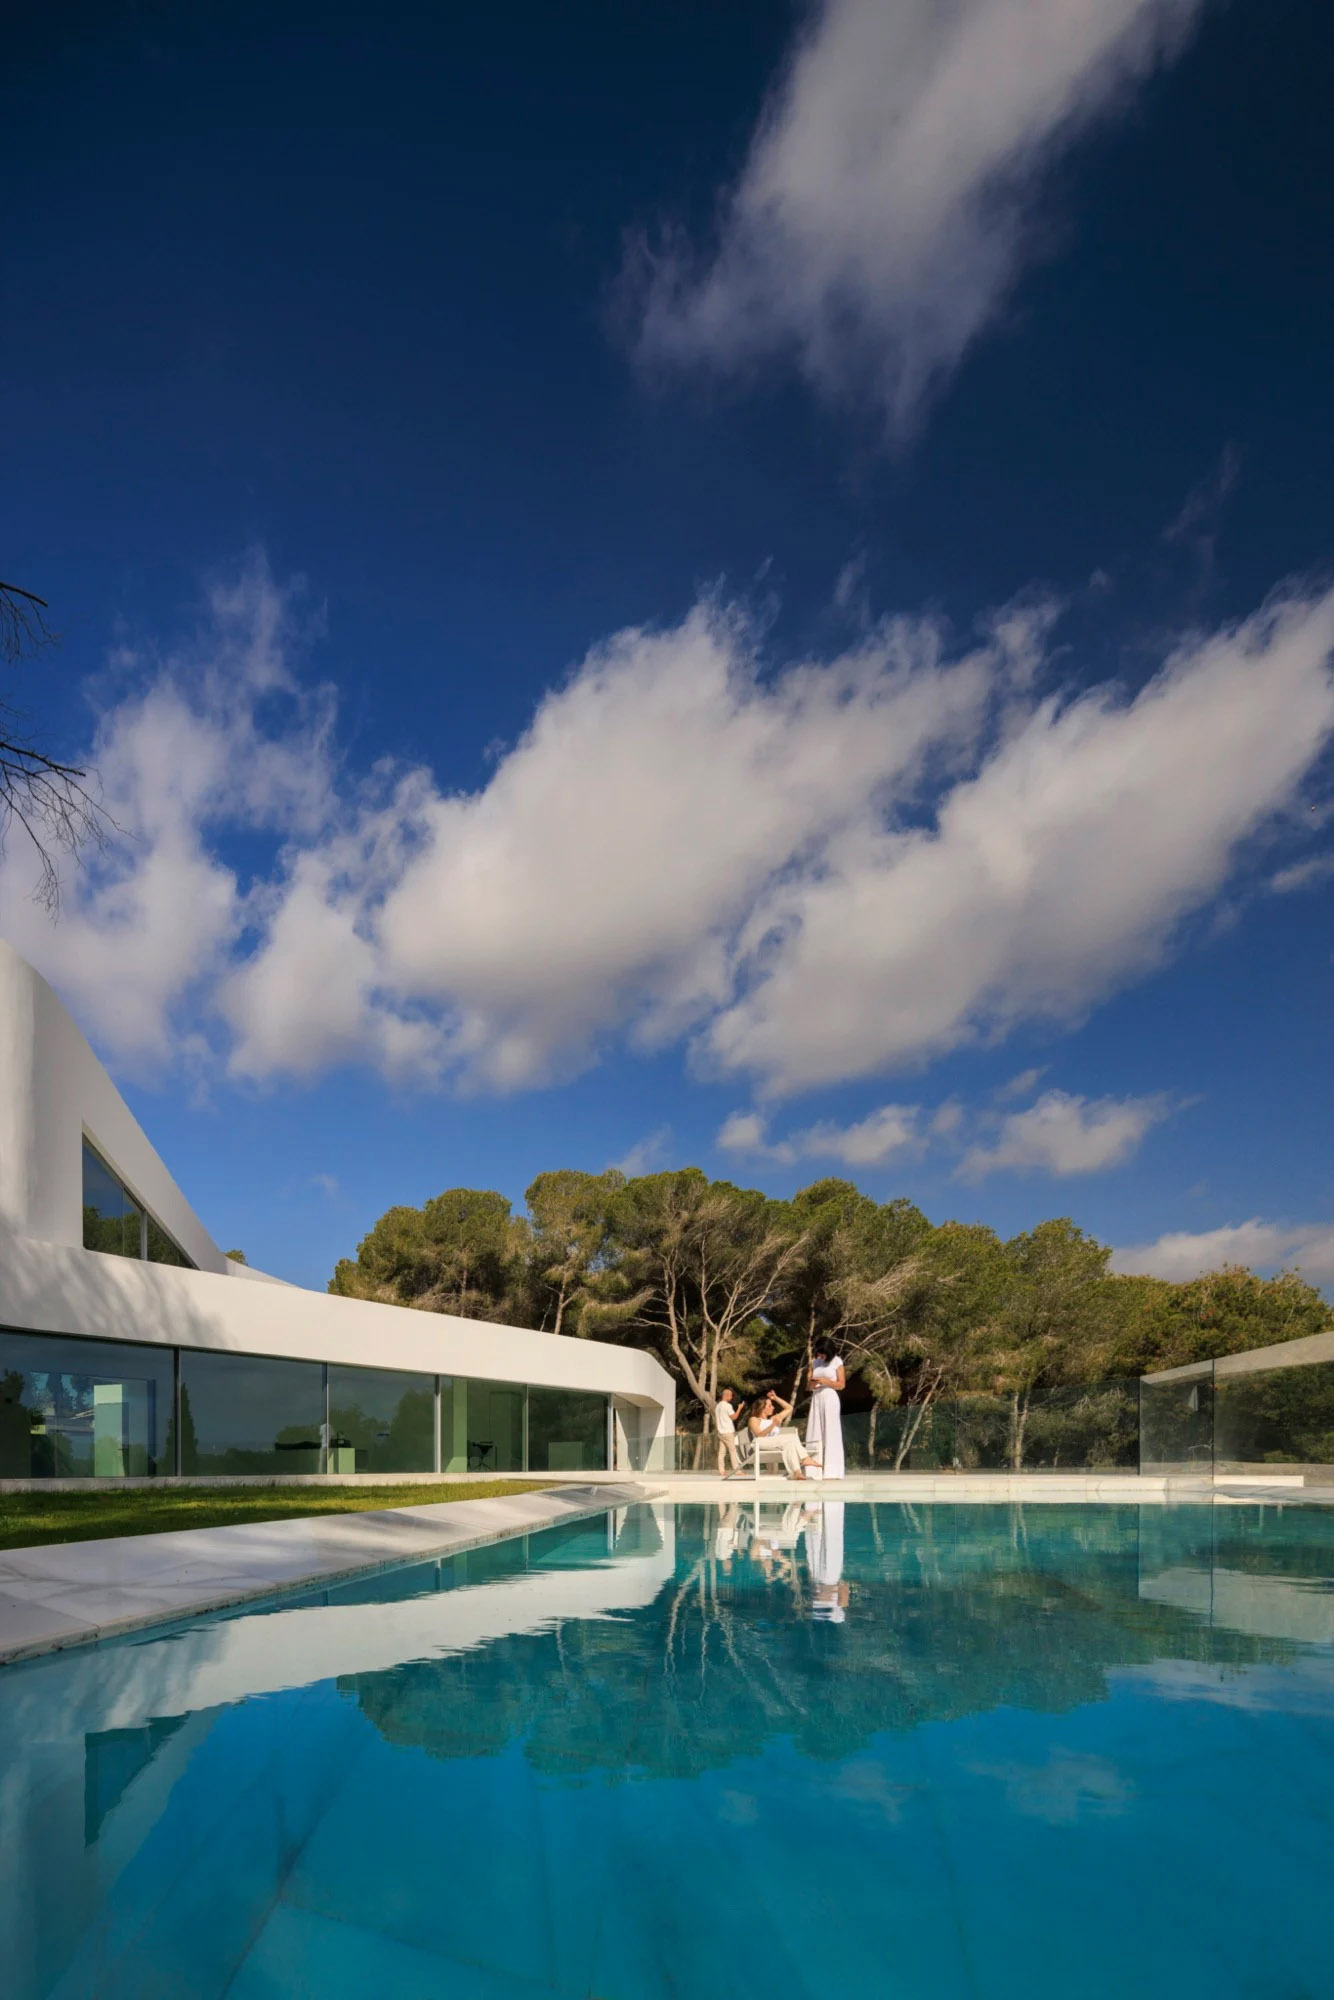 Fran Silvestre Arquitectos,别墅设计案例,别墅设计方案,海景别墅,西班牙,景观别墅,极简主义,极简风格